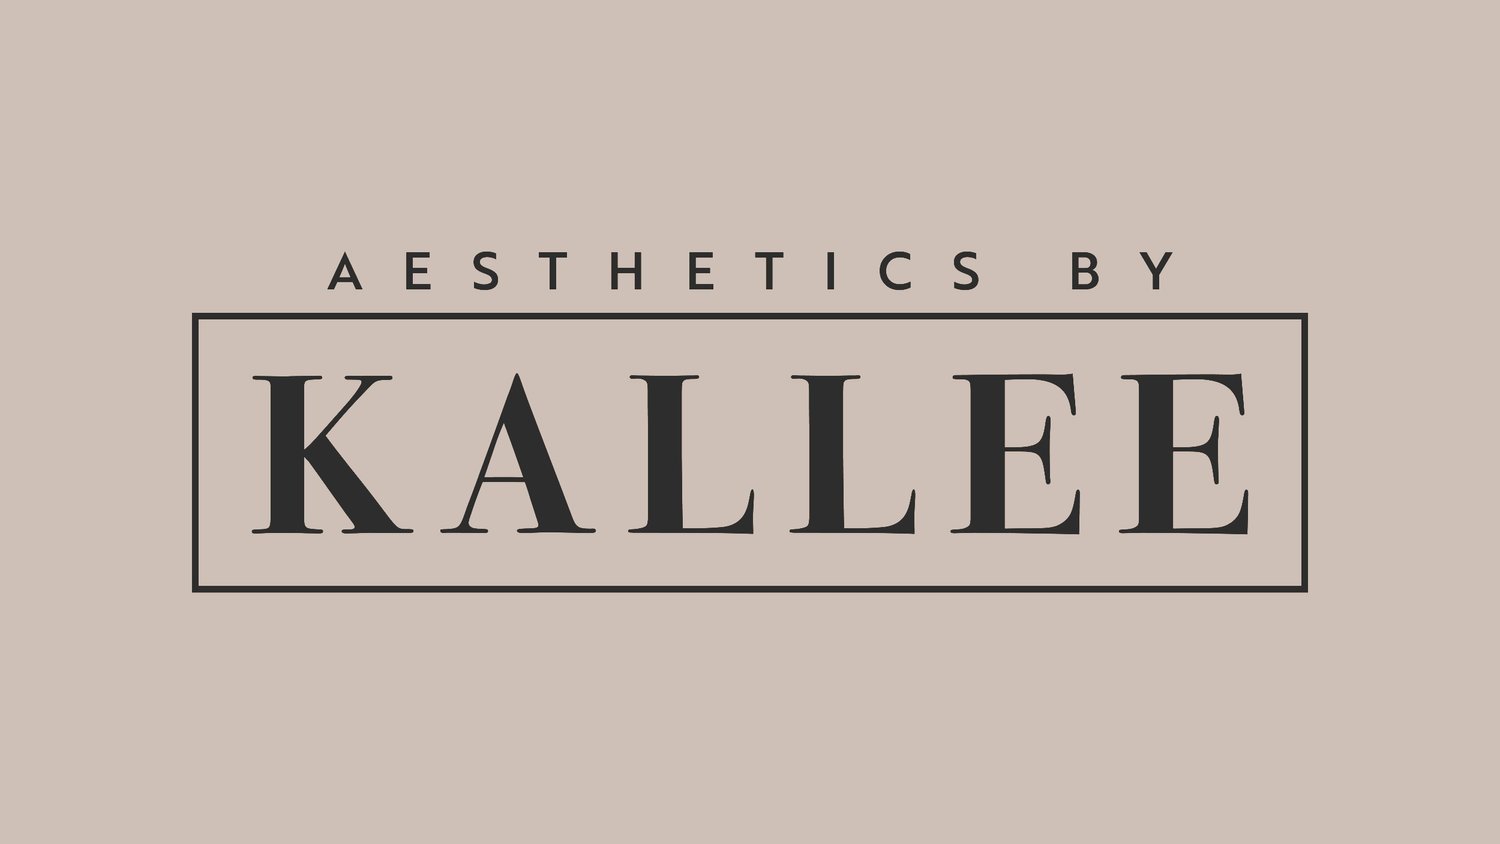 Aesthetics By Kallee